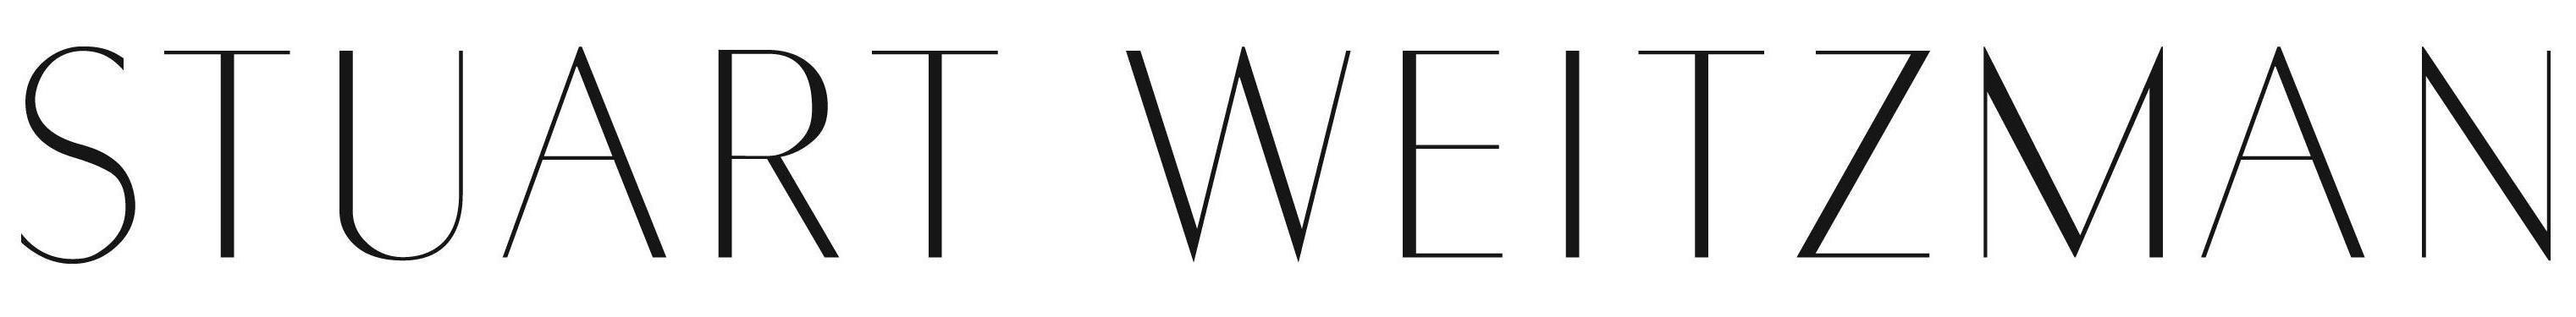 Stuart Weitzman Logo - Stuart Weitzman Competitors, Revenue and Employees Company